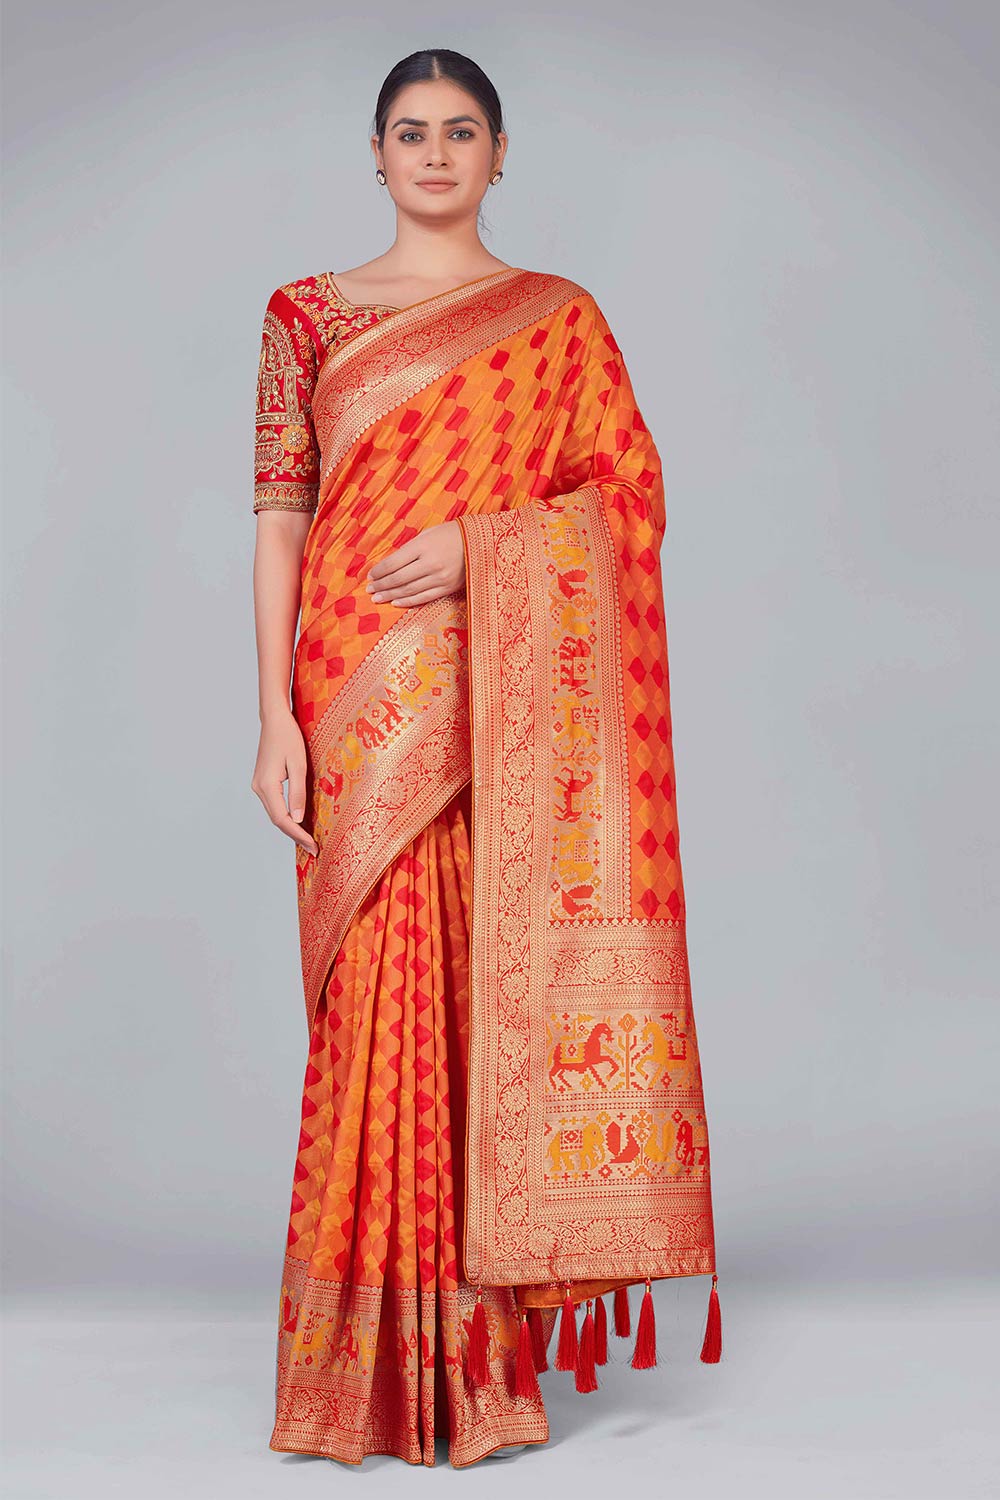 Orange Banarasi Silk woven Saree